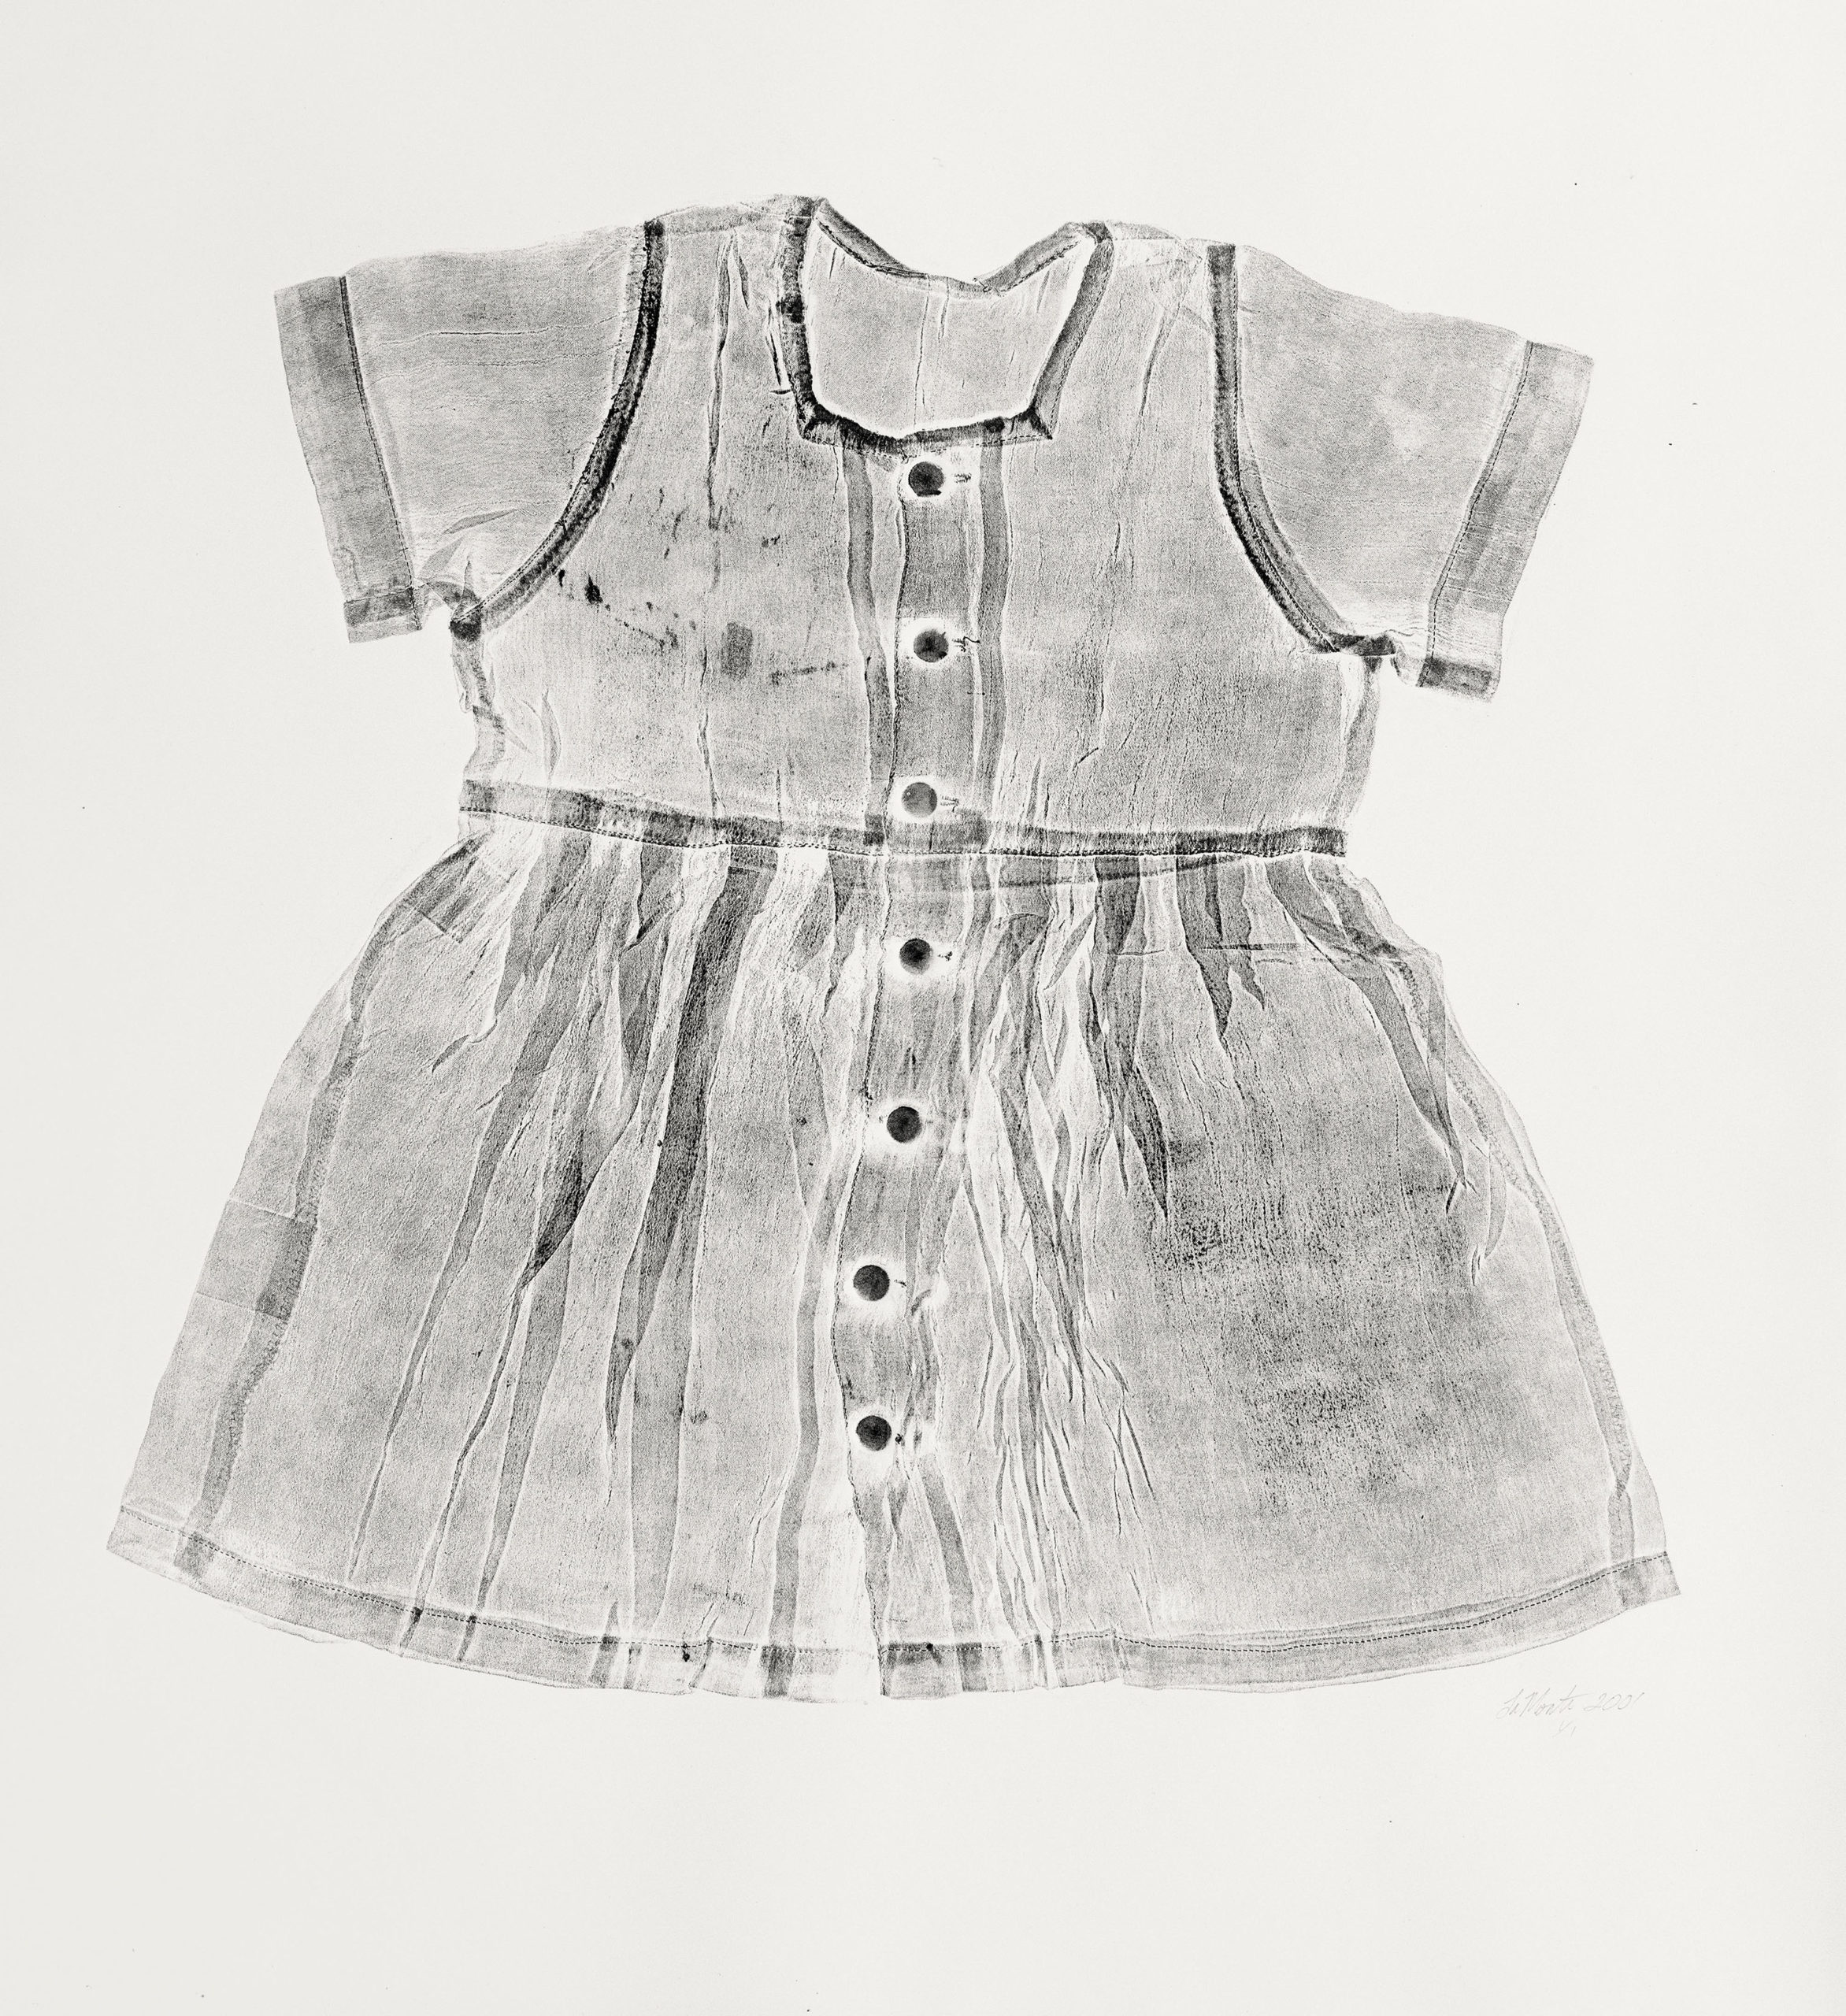 

											Karen LaMonte</b>

											<em>
												Sartoriptypes</em> 

											<h4>
																							</h4>

		                																																<i>Impression Child’s Dress,</i>  
																																								2001, 
																																								Sartoriotype, Monotype print on smooth art paper, 
																																								25 ⅔ × 23 inches  
																								
		                				